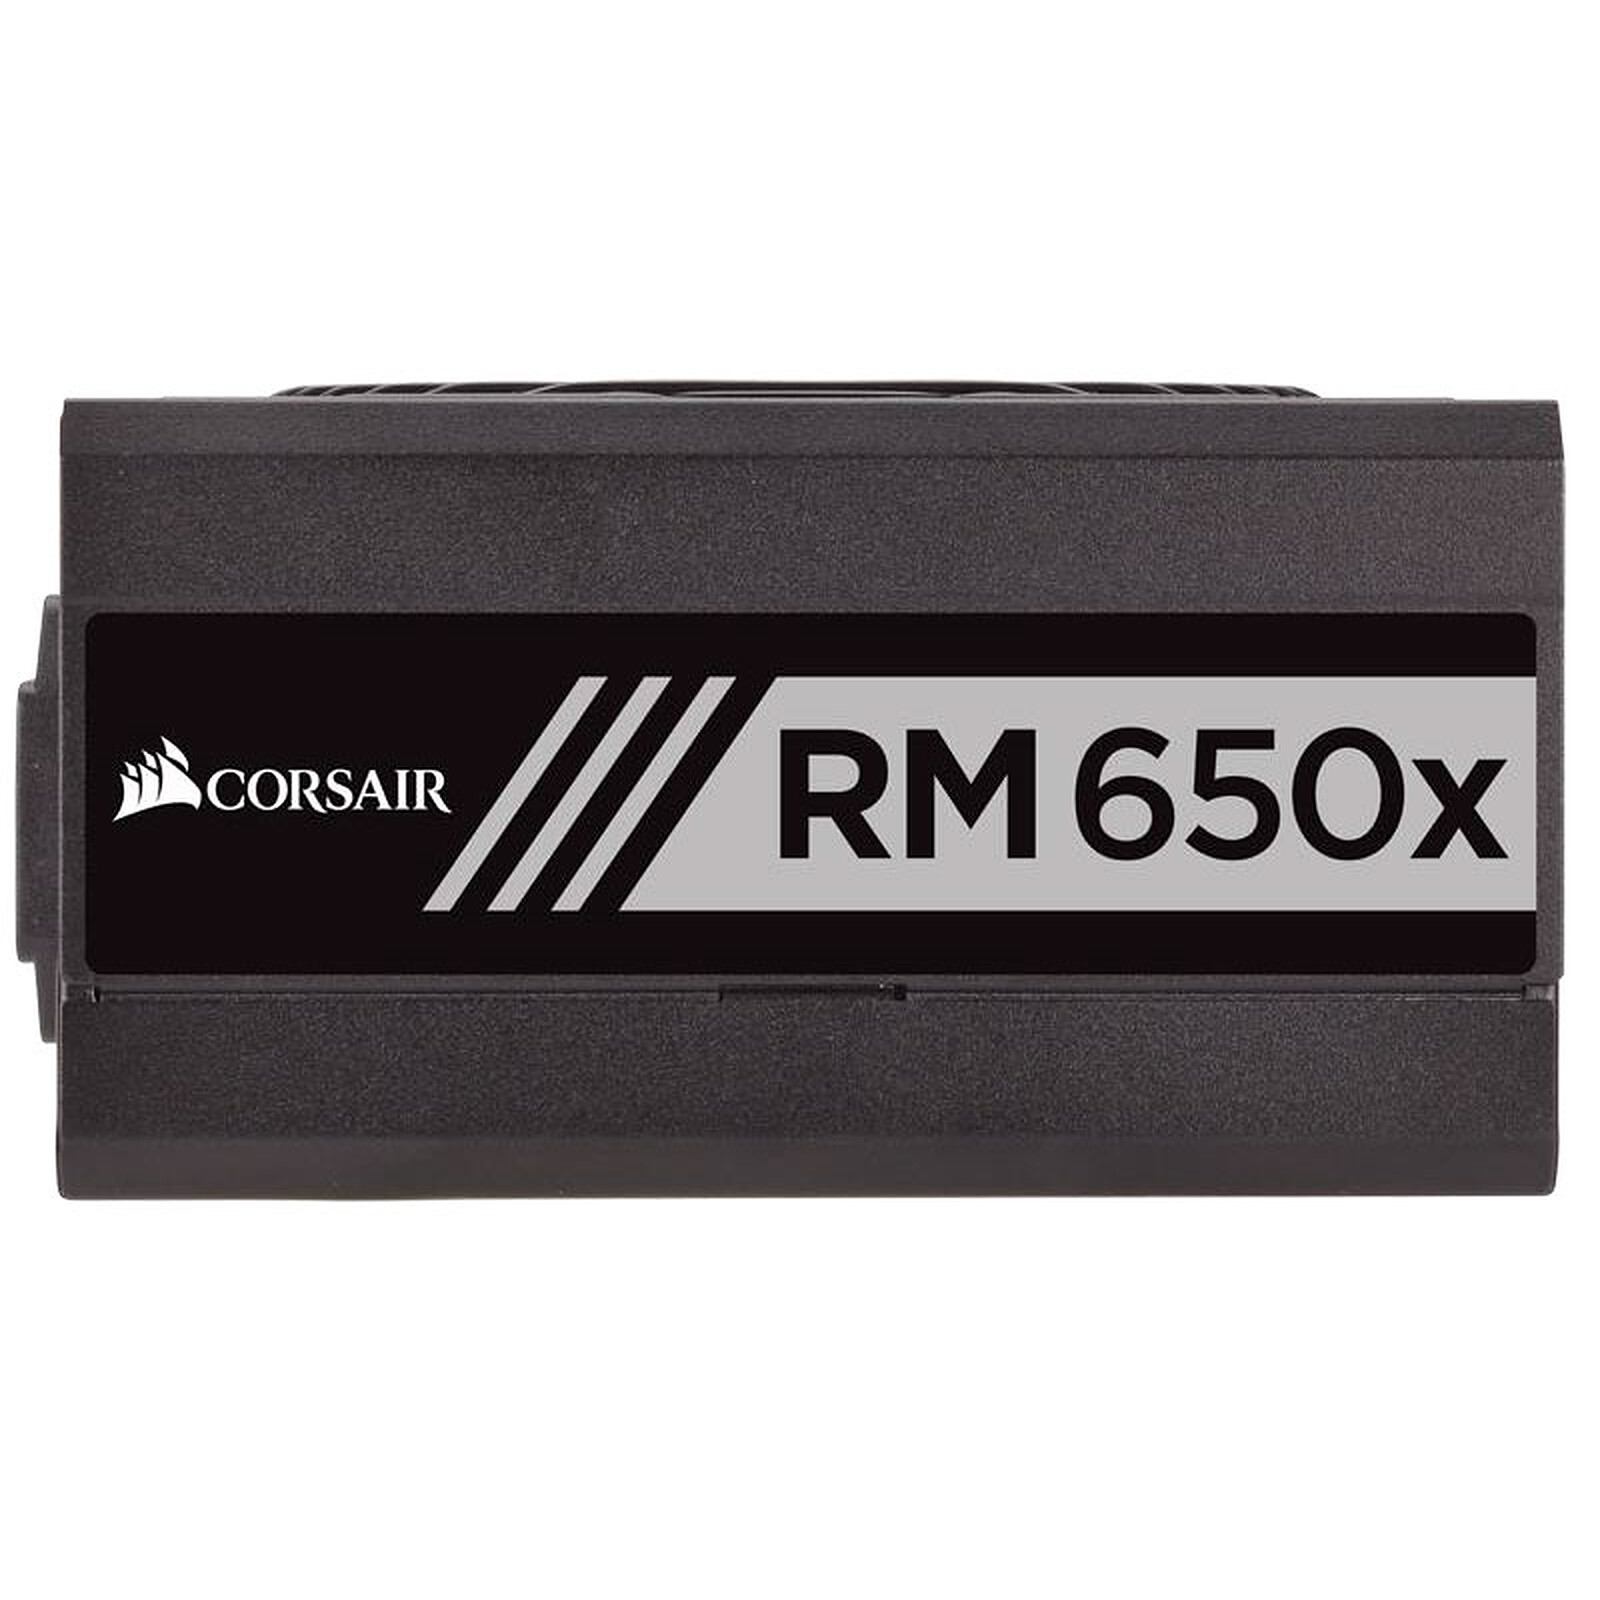 Corsair RM650x V2 80PLUS Gold PC power supply LDLC 3-year warranty